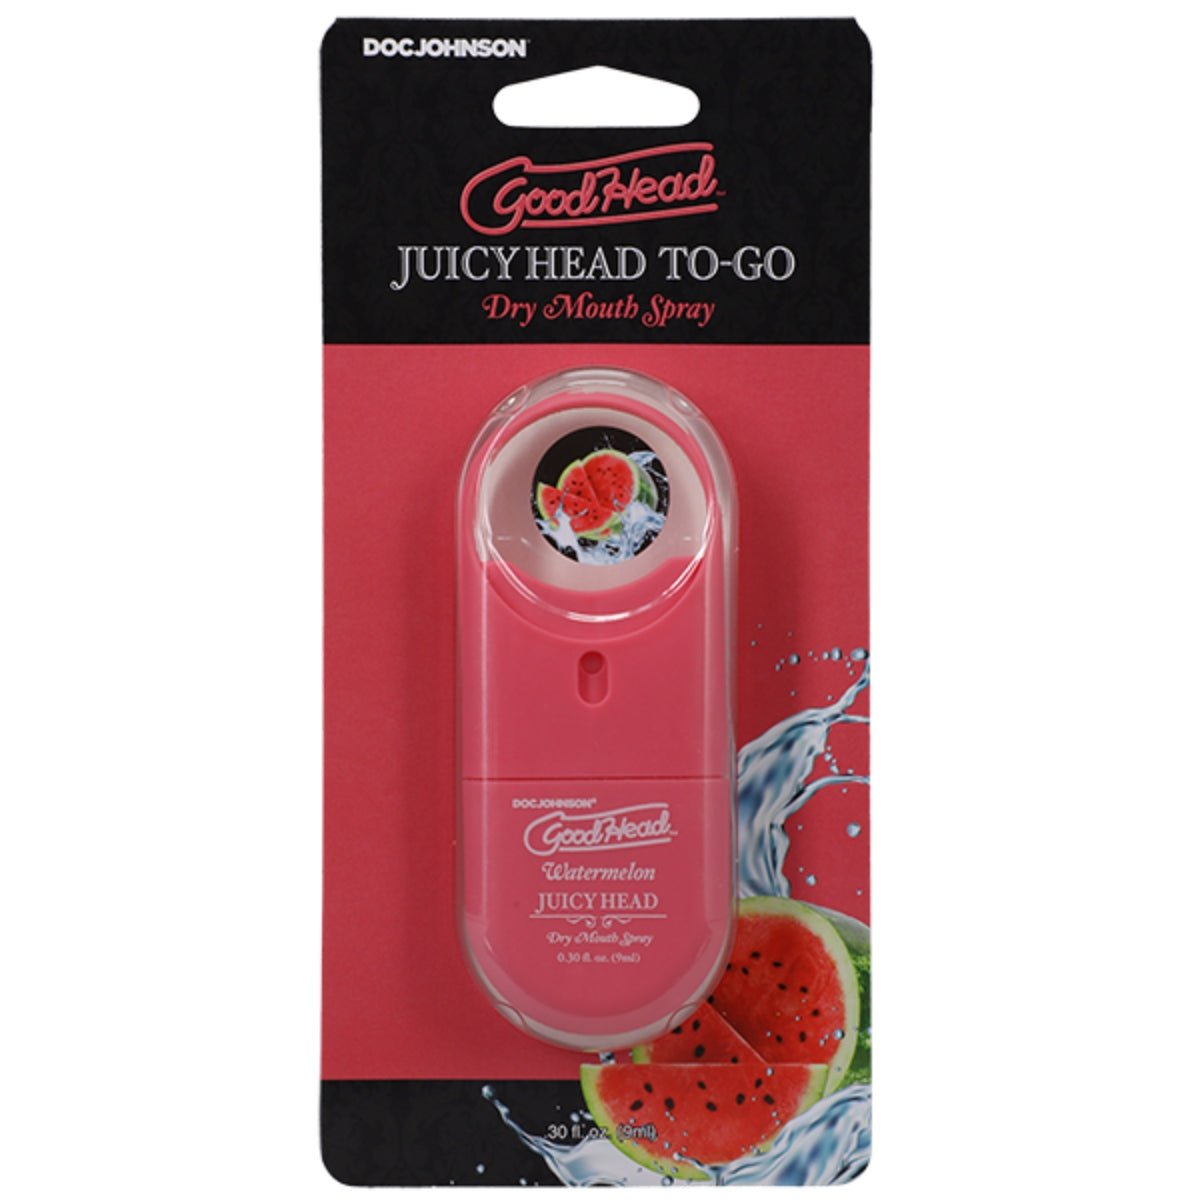 Flavoured Lube Goodhead Juicy Head Dry Mouth Spray To-Go Watermelon 30 fl oz   